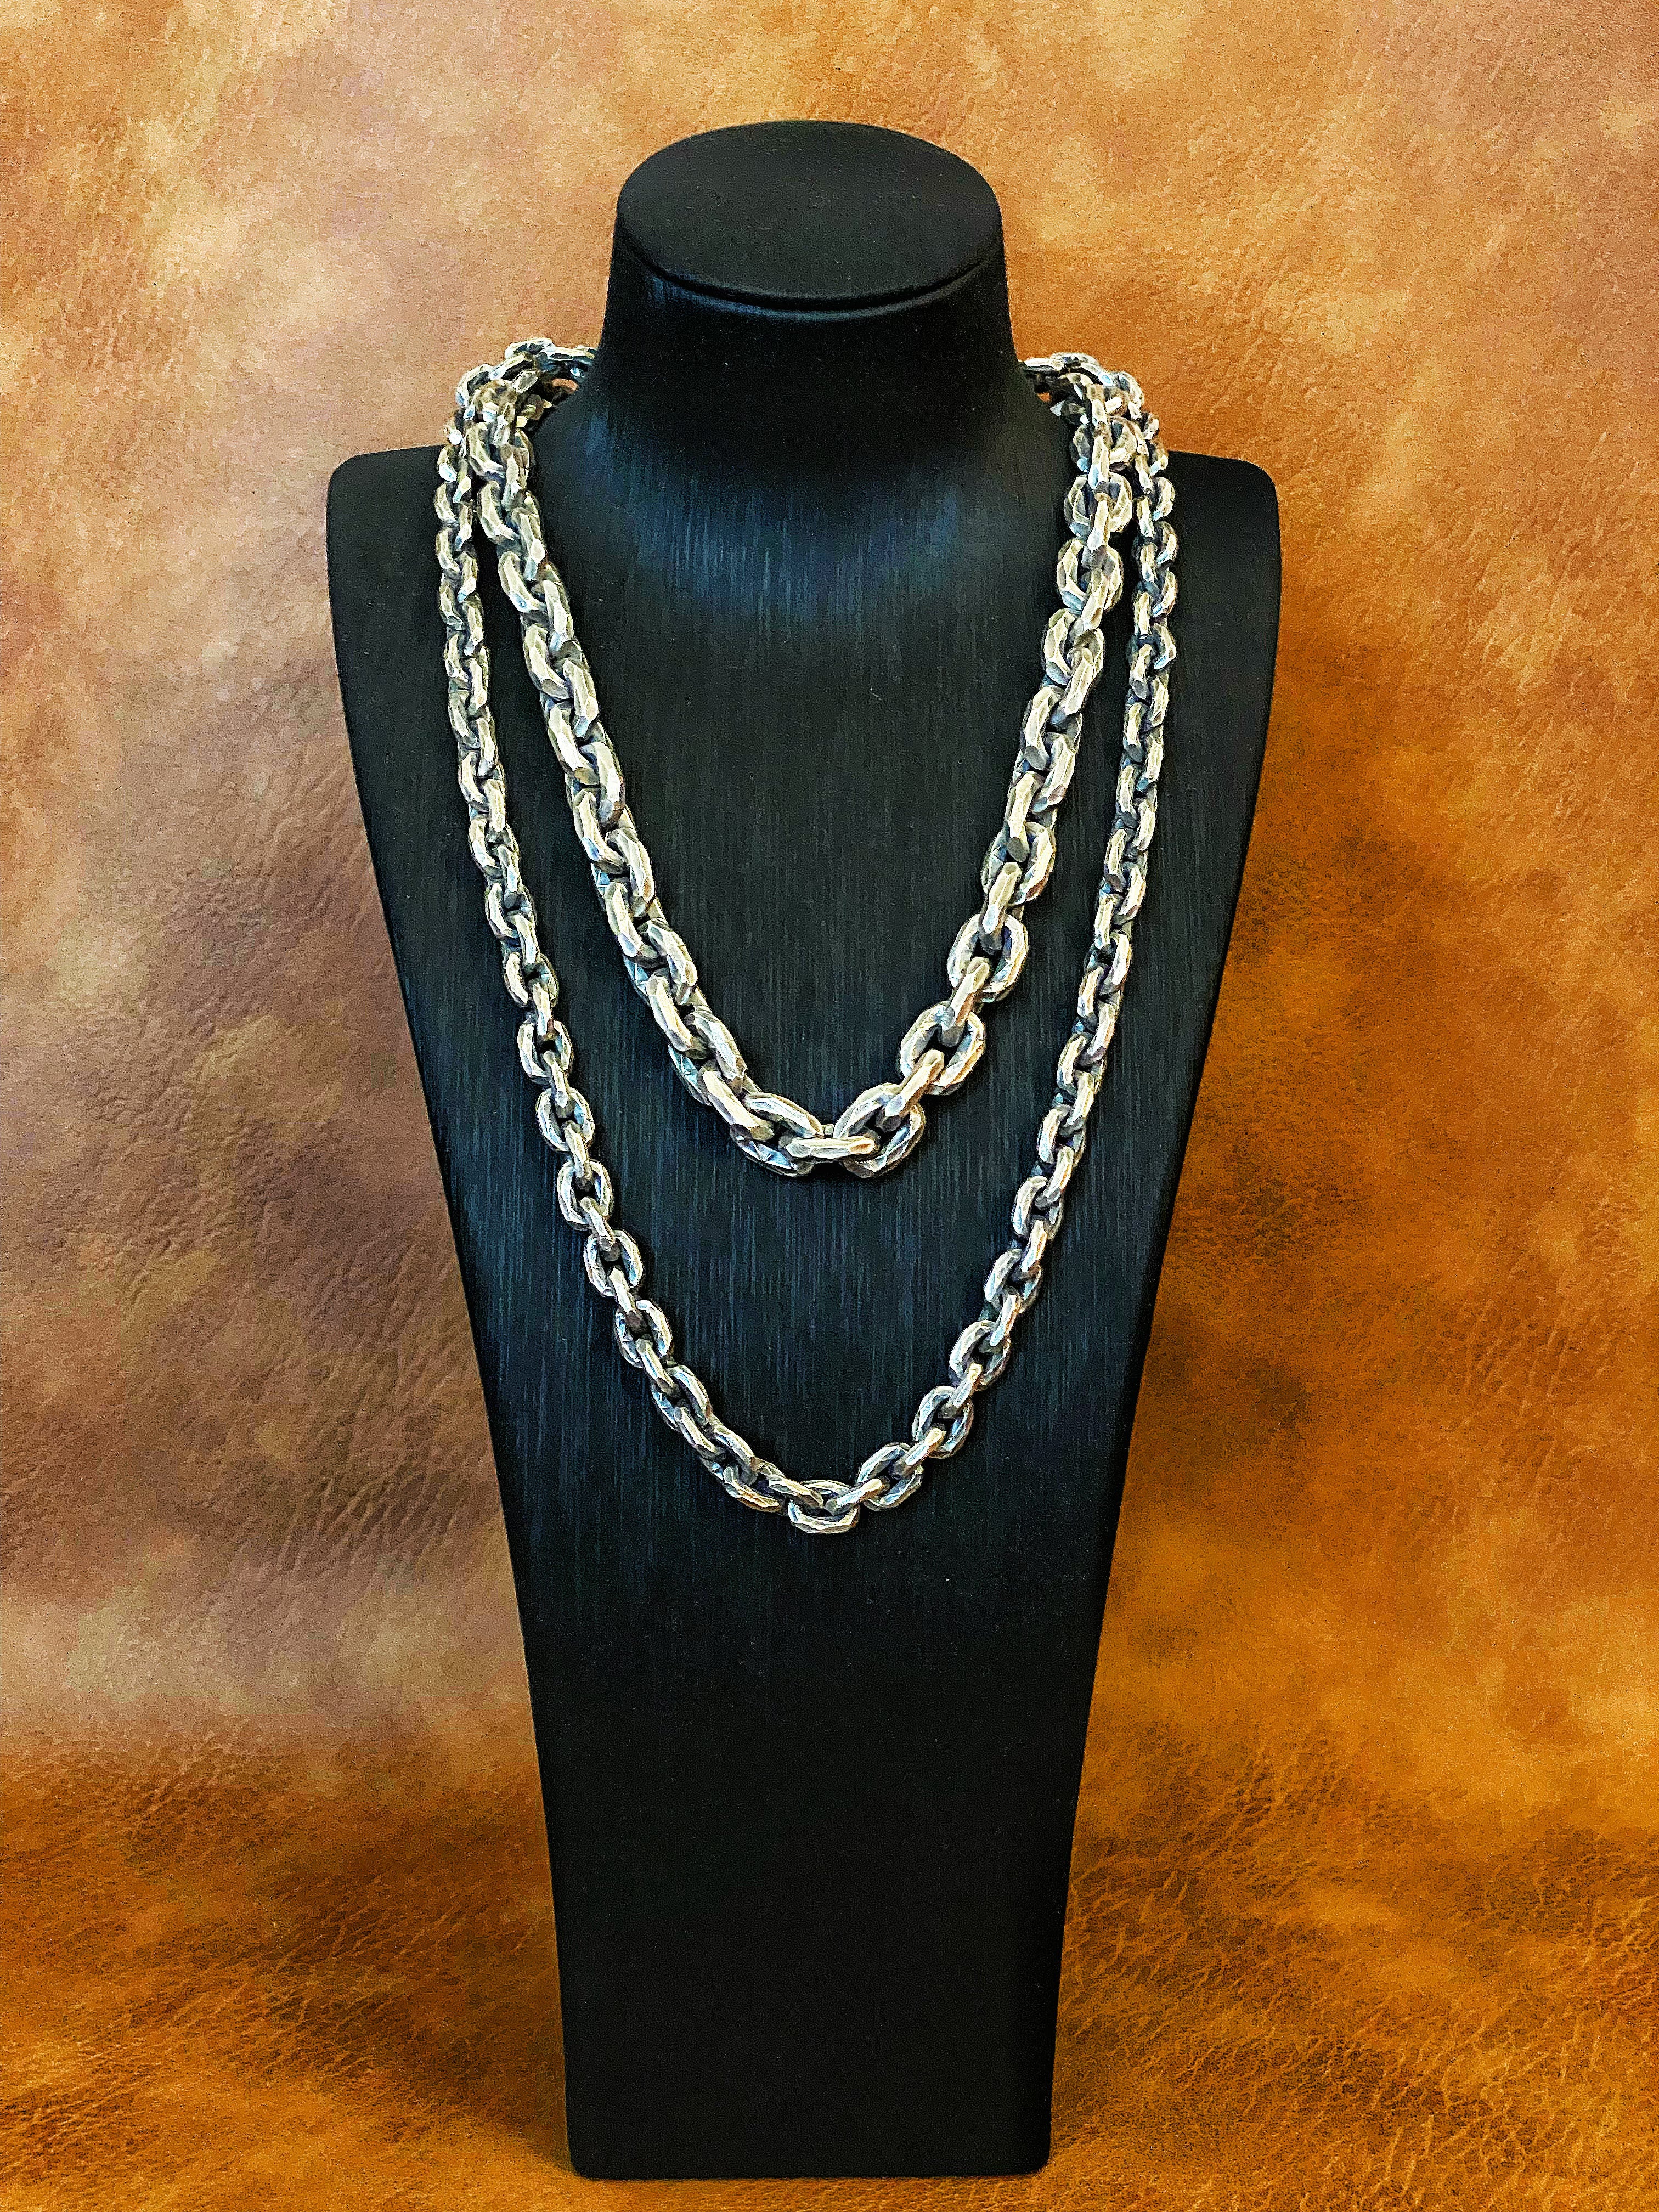 8mm Hammered Silver Necklace Chain (Item No. N0004) Tartaria Onlinestore